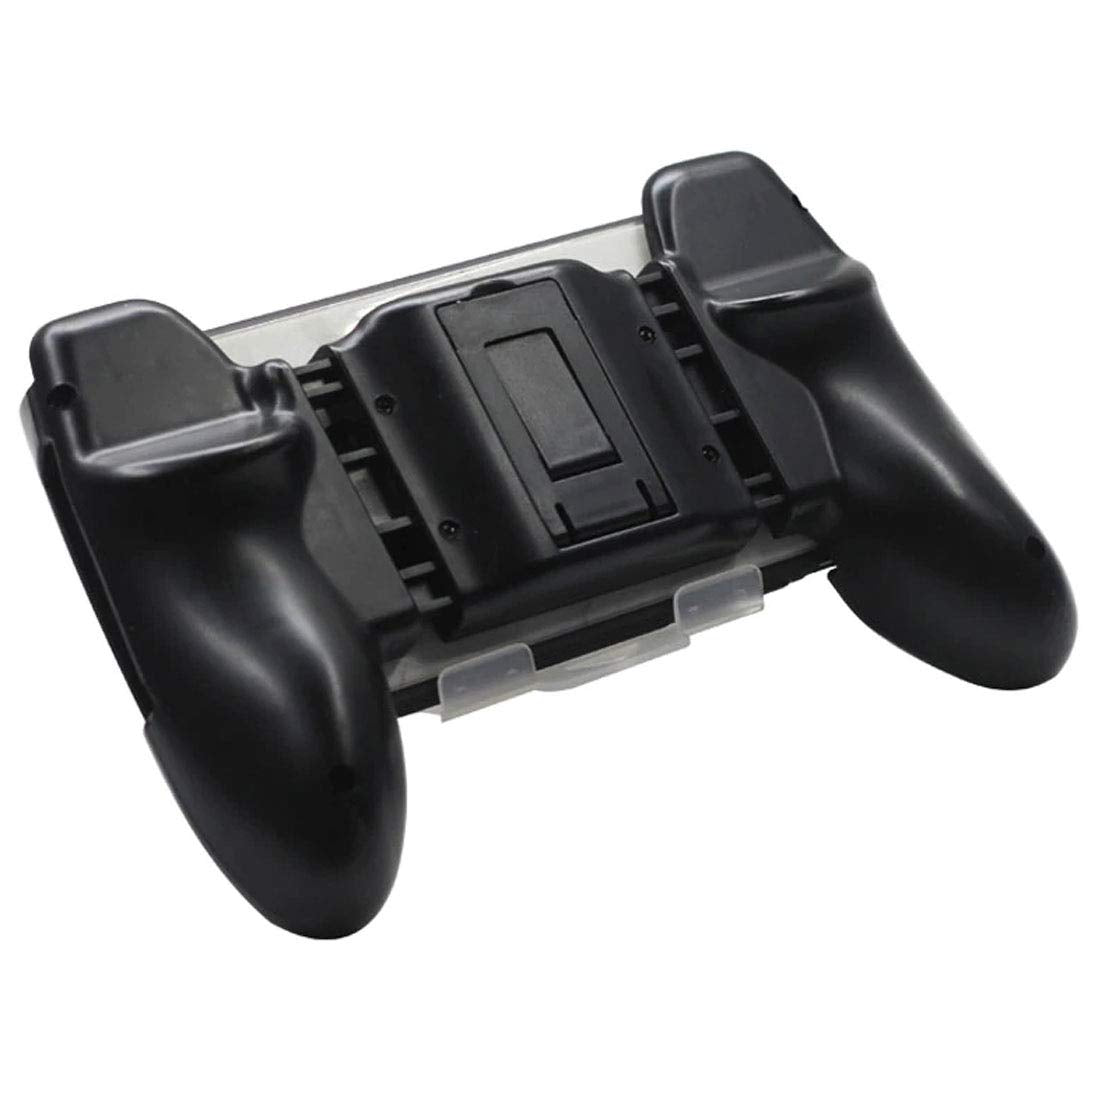 Mobile Joystick Controller Grip Case for Smartphones, Mobile Phone Gaming Grip with Joystick, Controller Holder Ergonomic Design (Black Type 01)